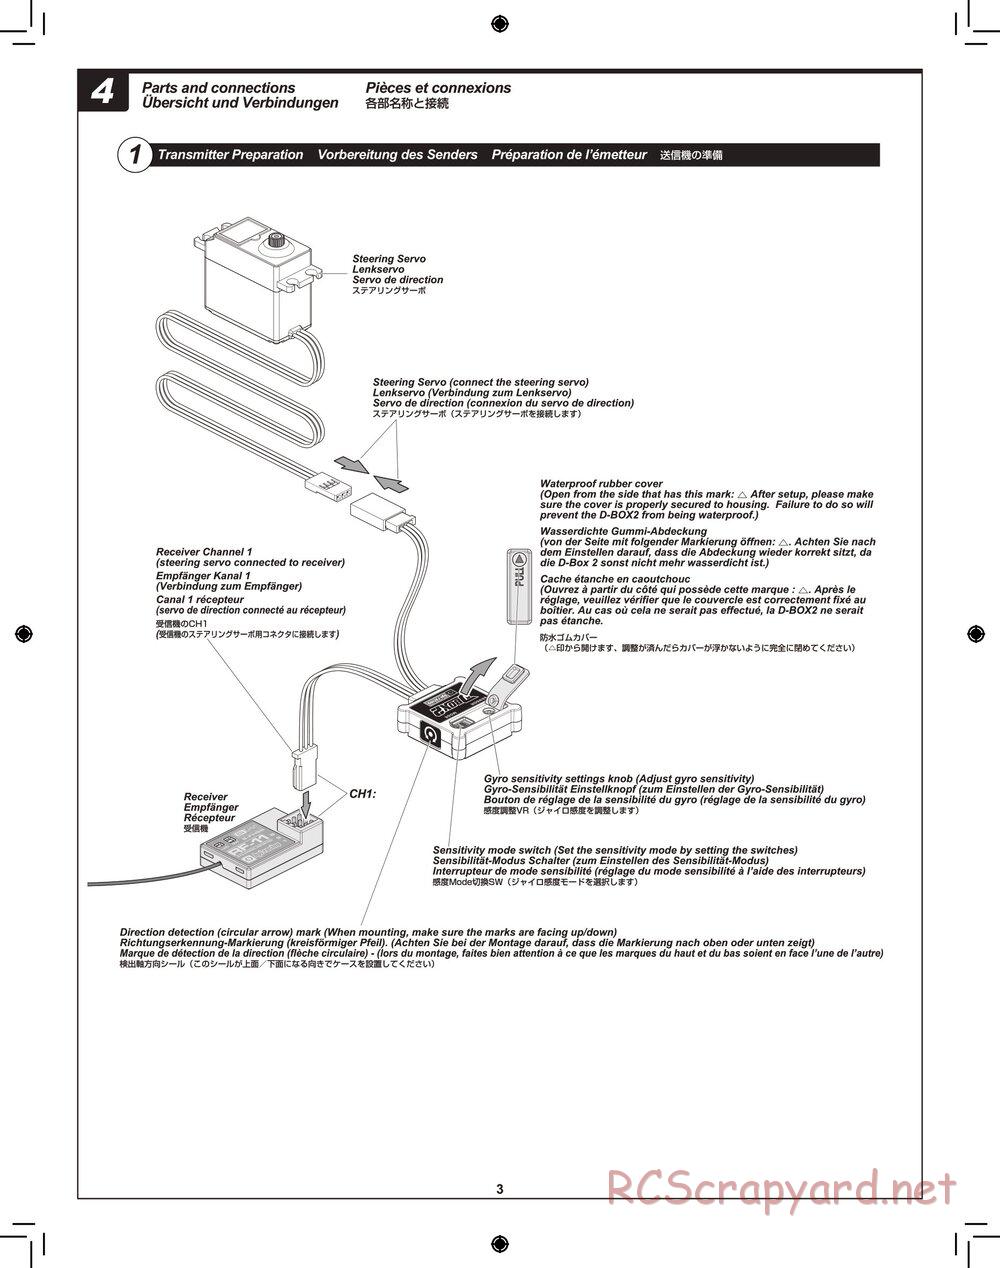 HPI - Baja 5B 2.0 D-Box2 - Manual - Page 3